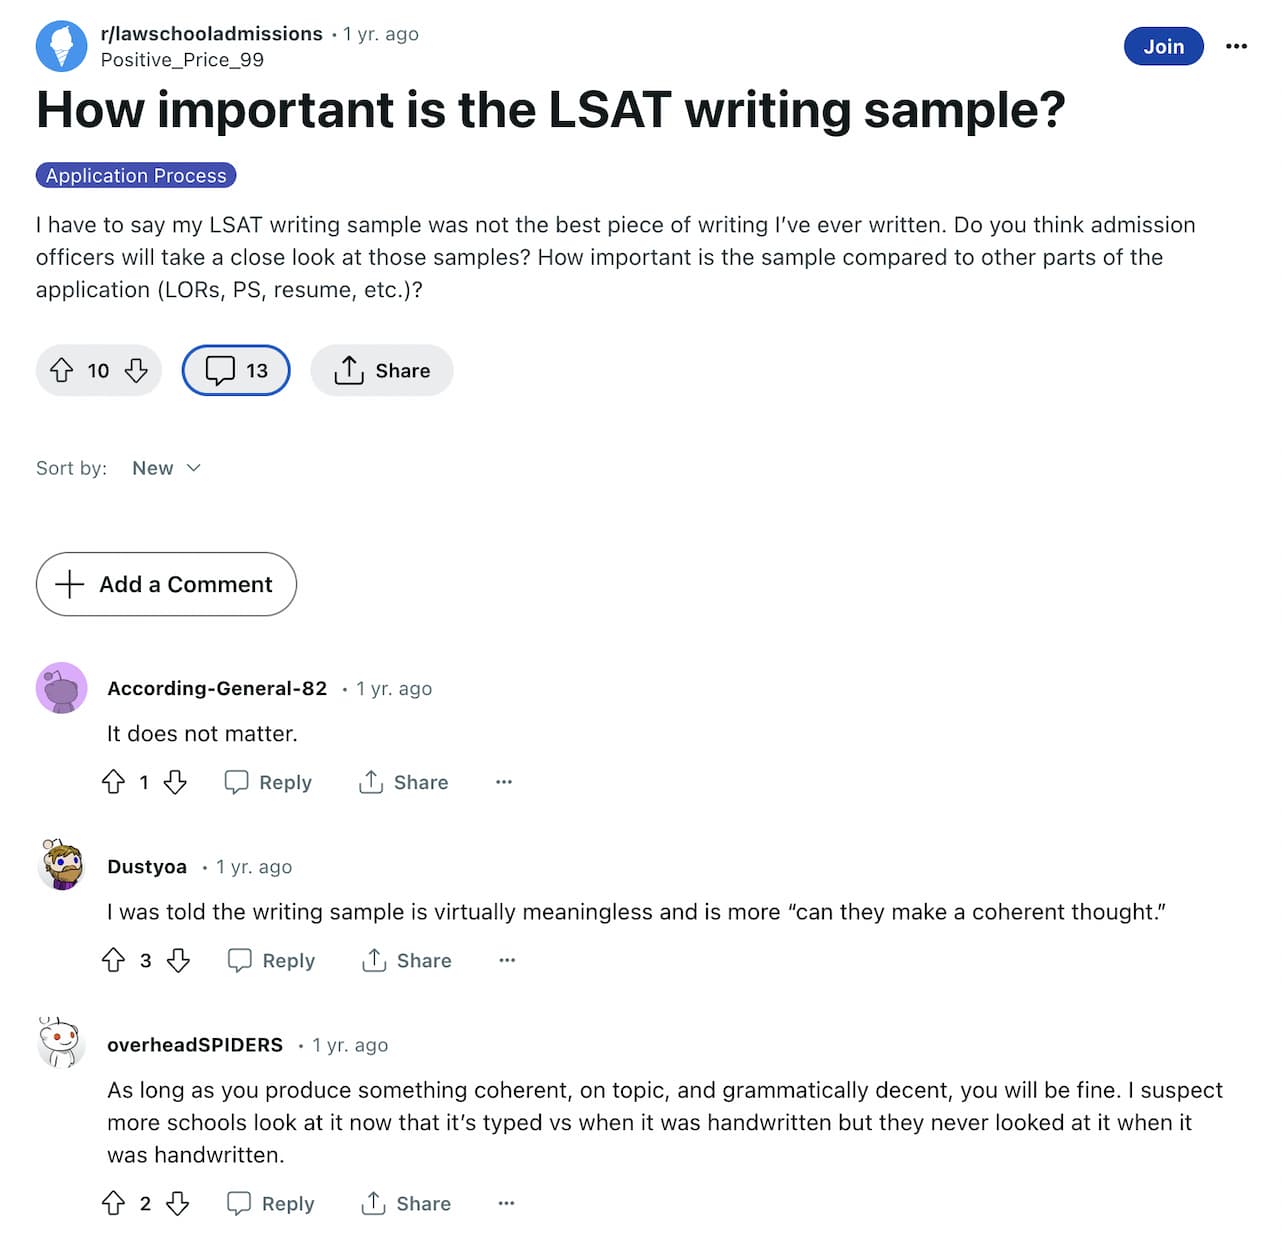 LSAT writing sample